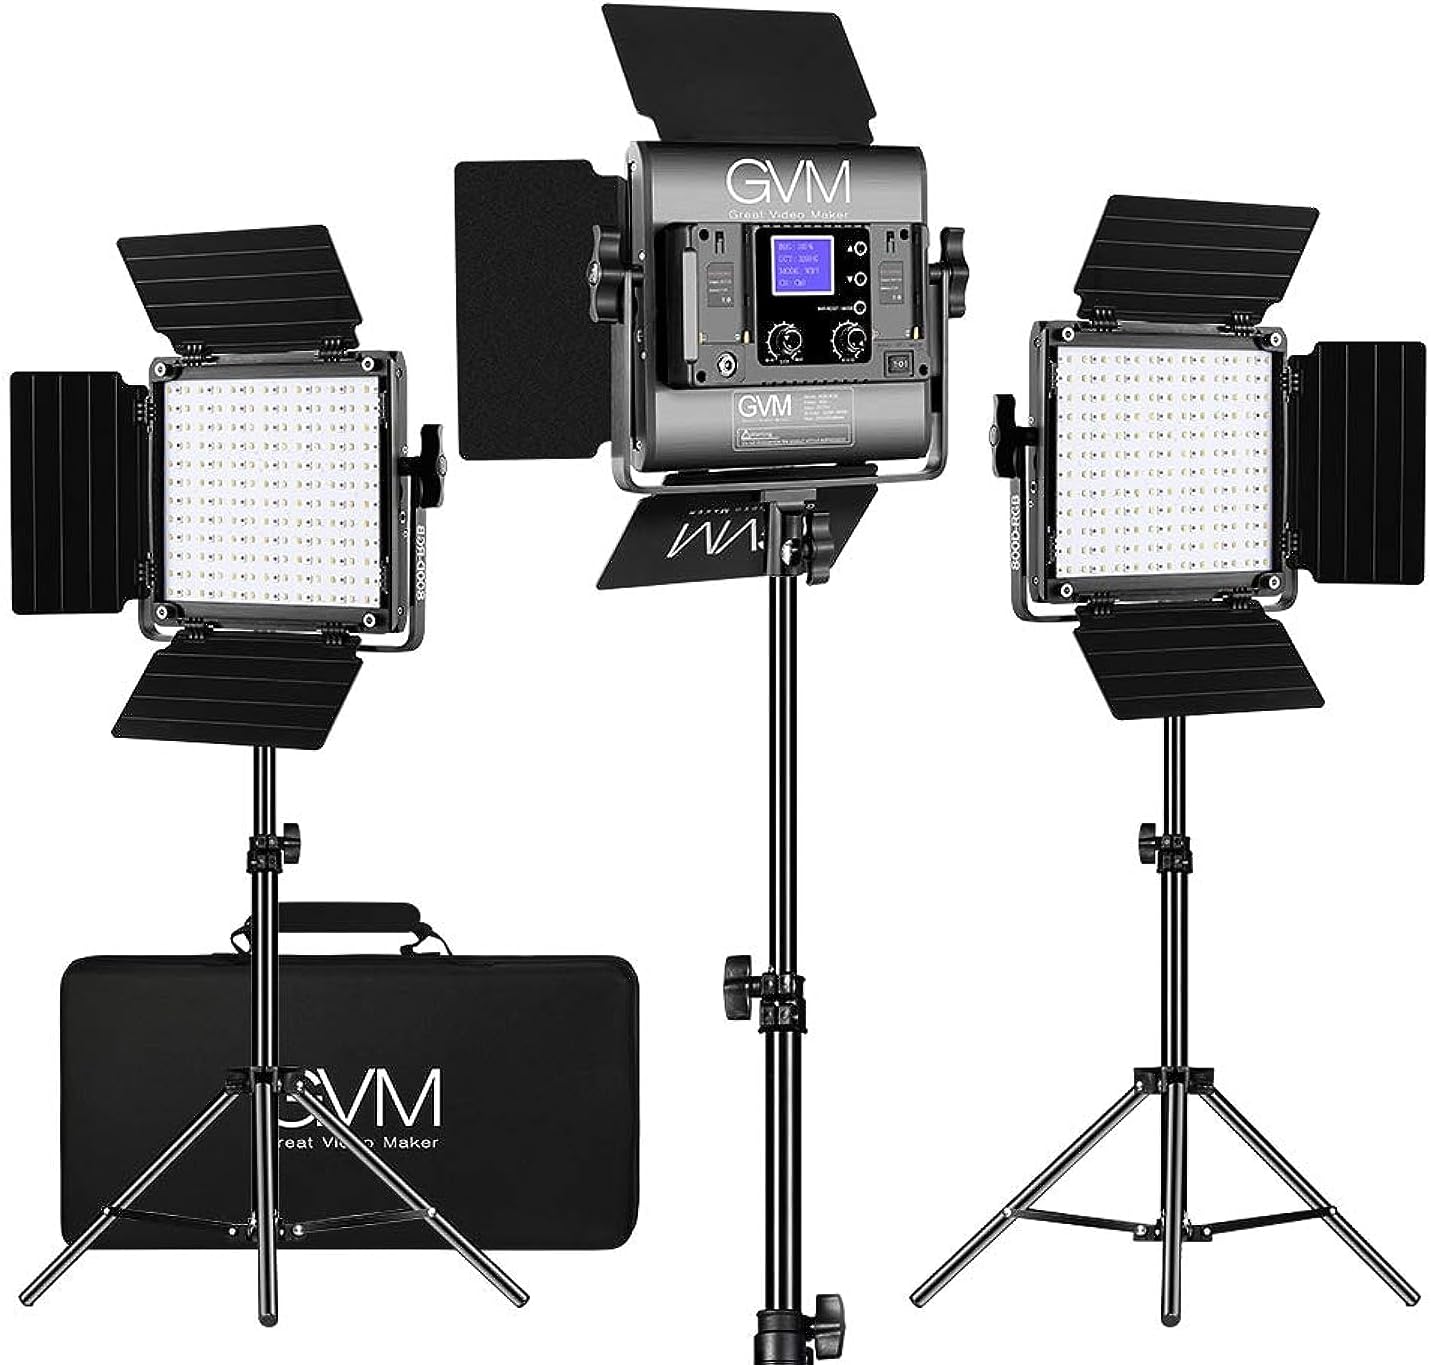 GVM RGB LED Video Lighting Kit Review